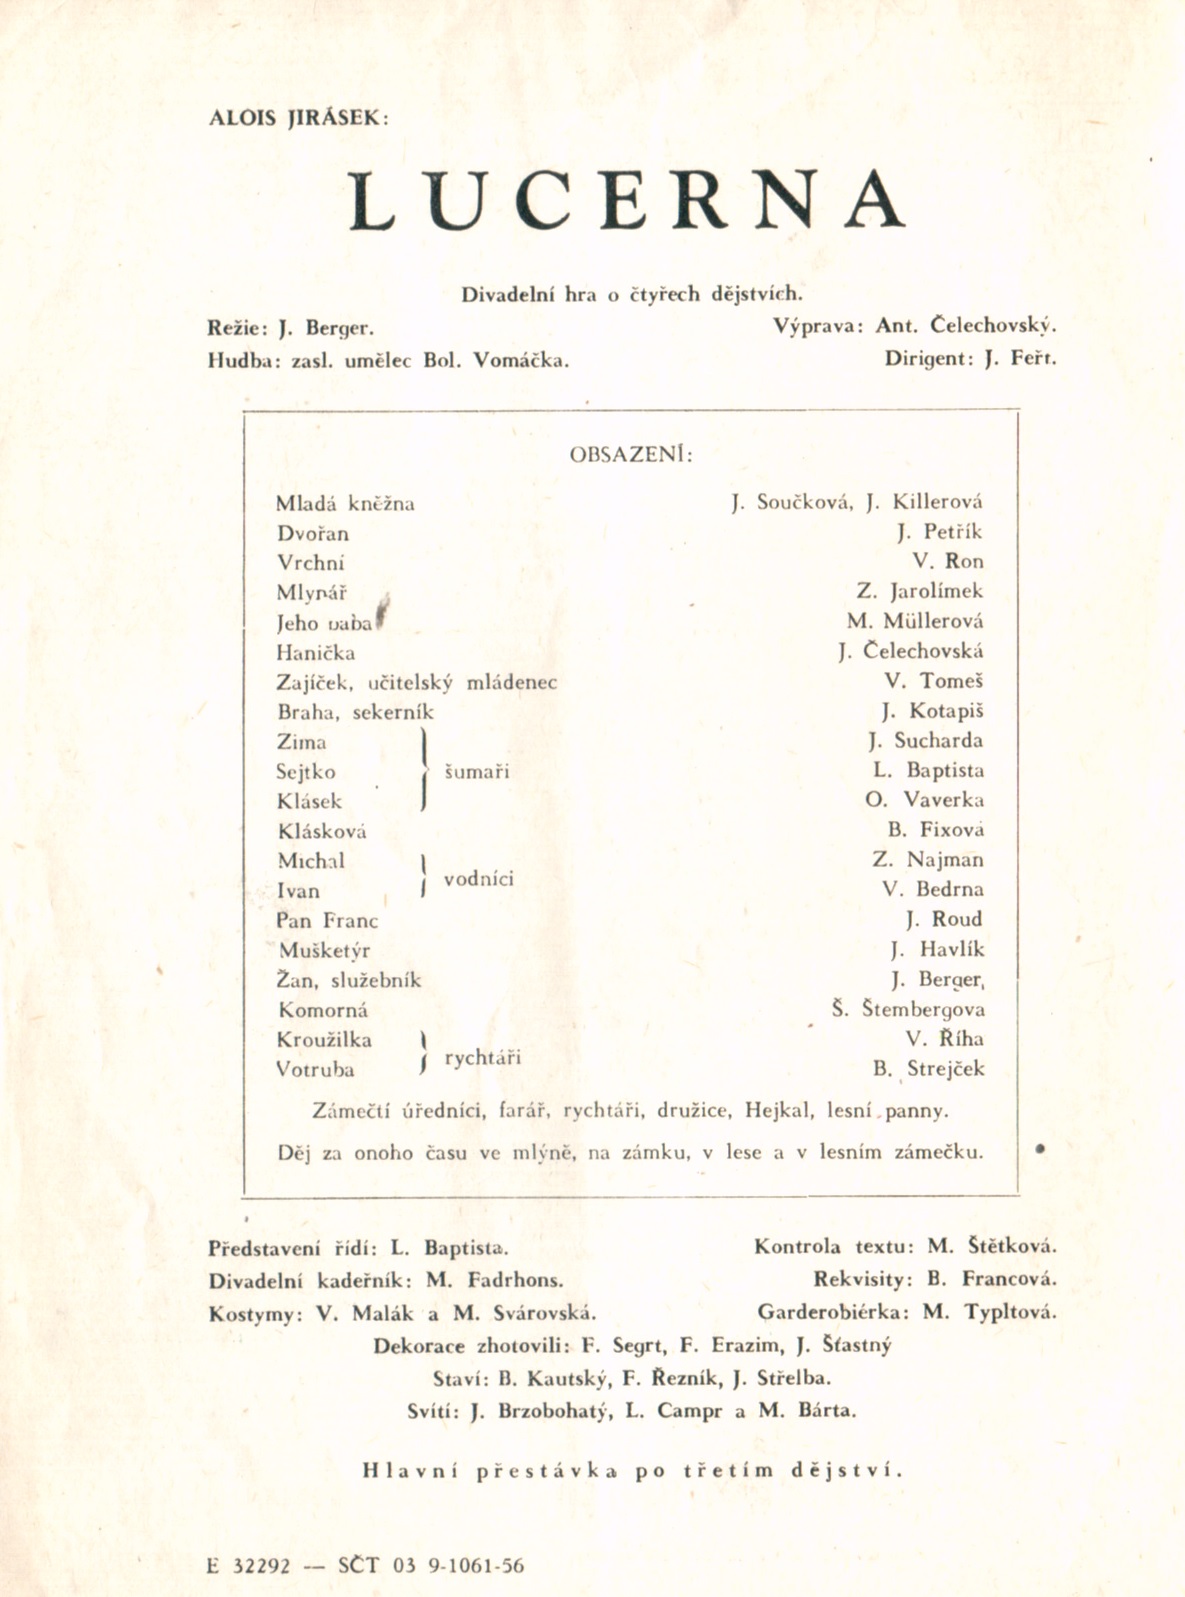 Lucerna - program